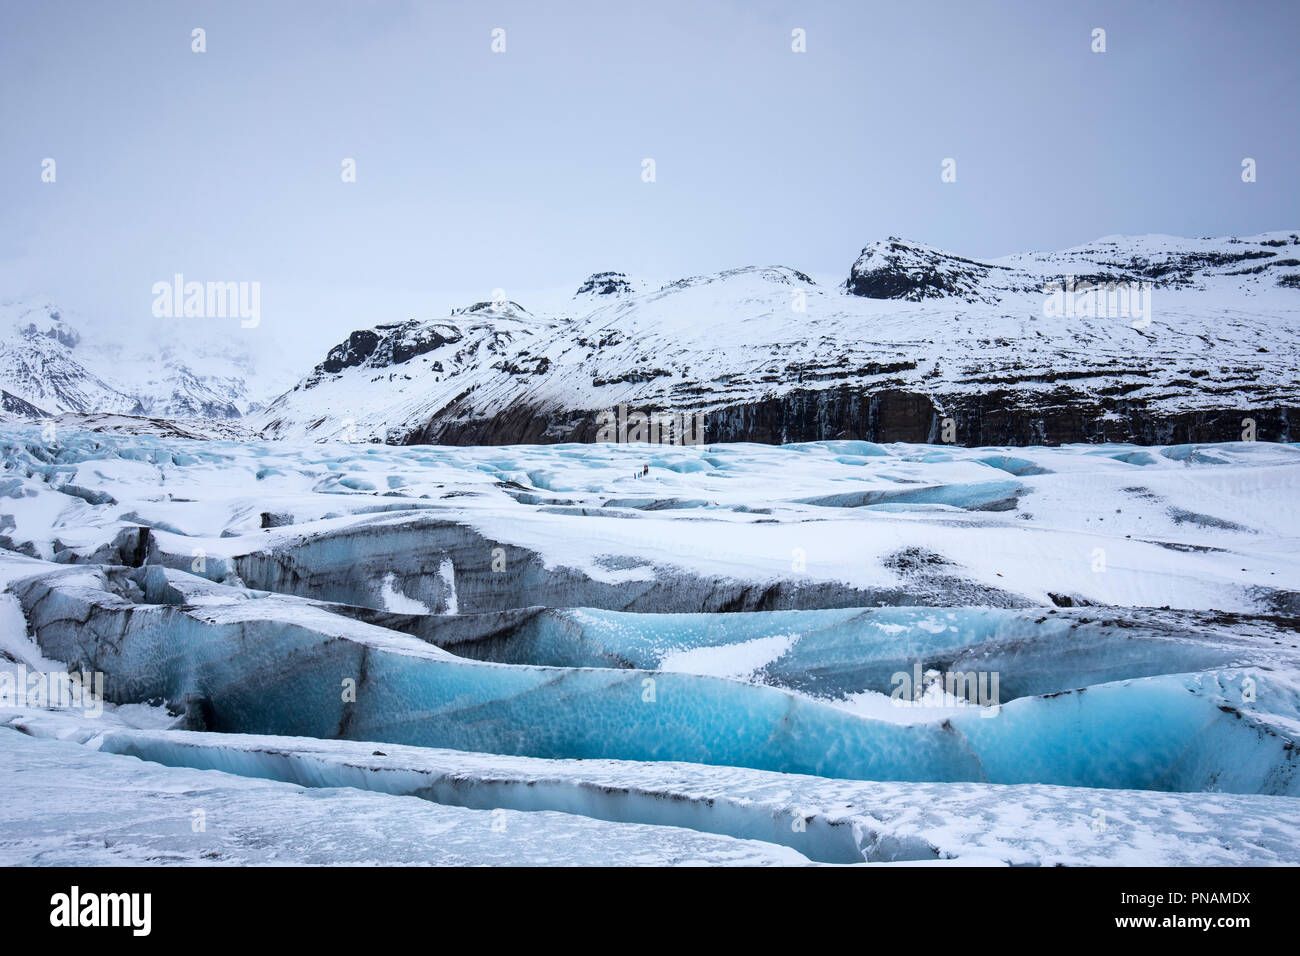 Cerrar las capas de bloques de hielo y la grieta de la lengua glacial de Svinafellsjokull, una salida del glaciar Vatnajokull, en el sur de Islandia Foto de stock